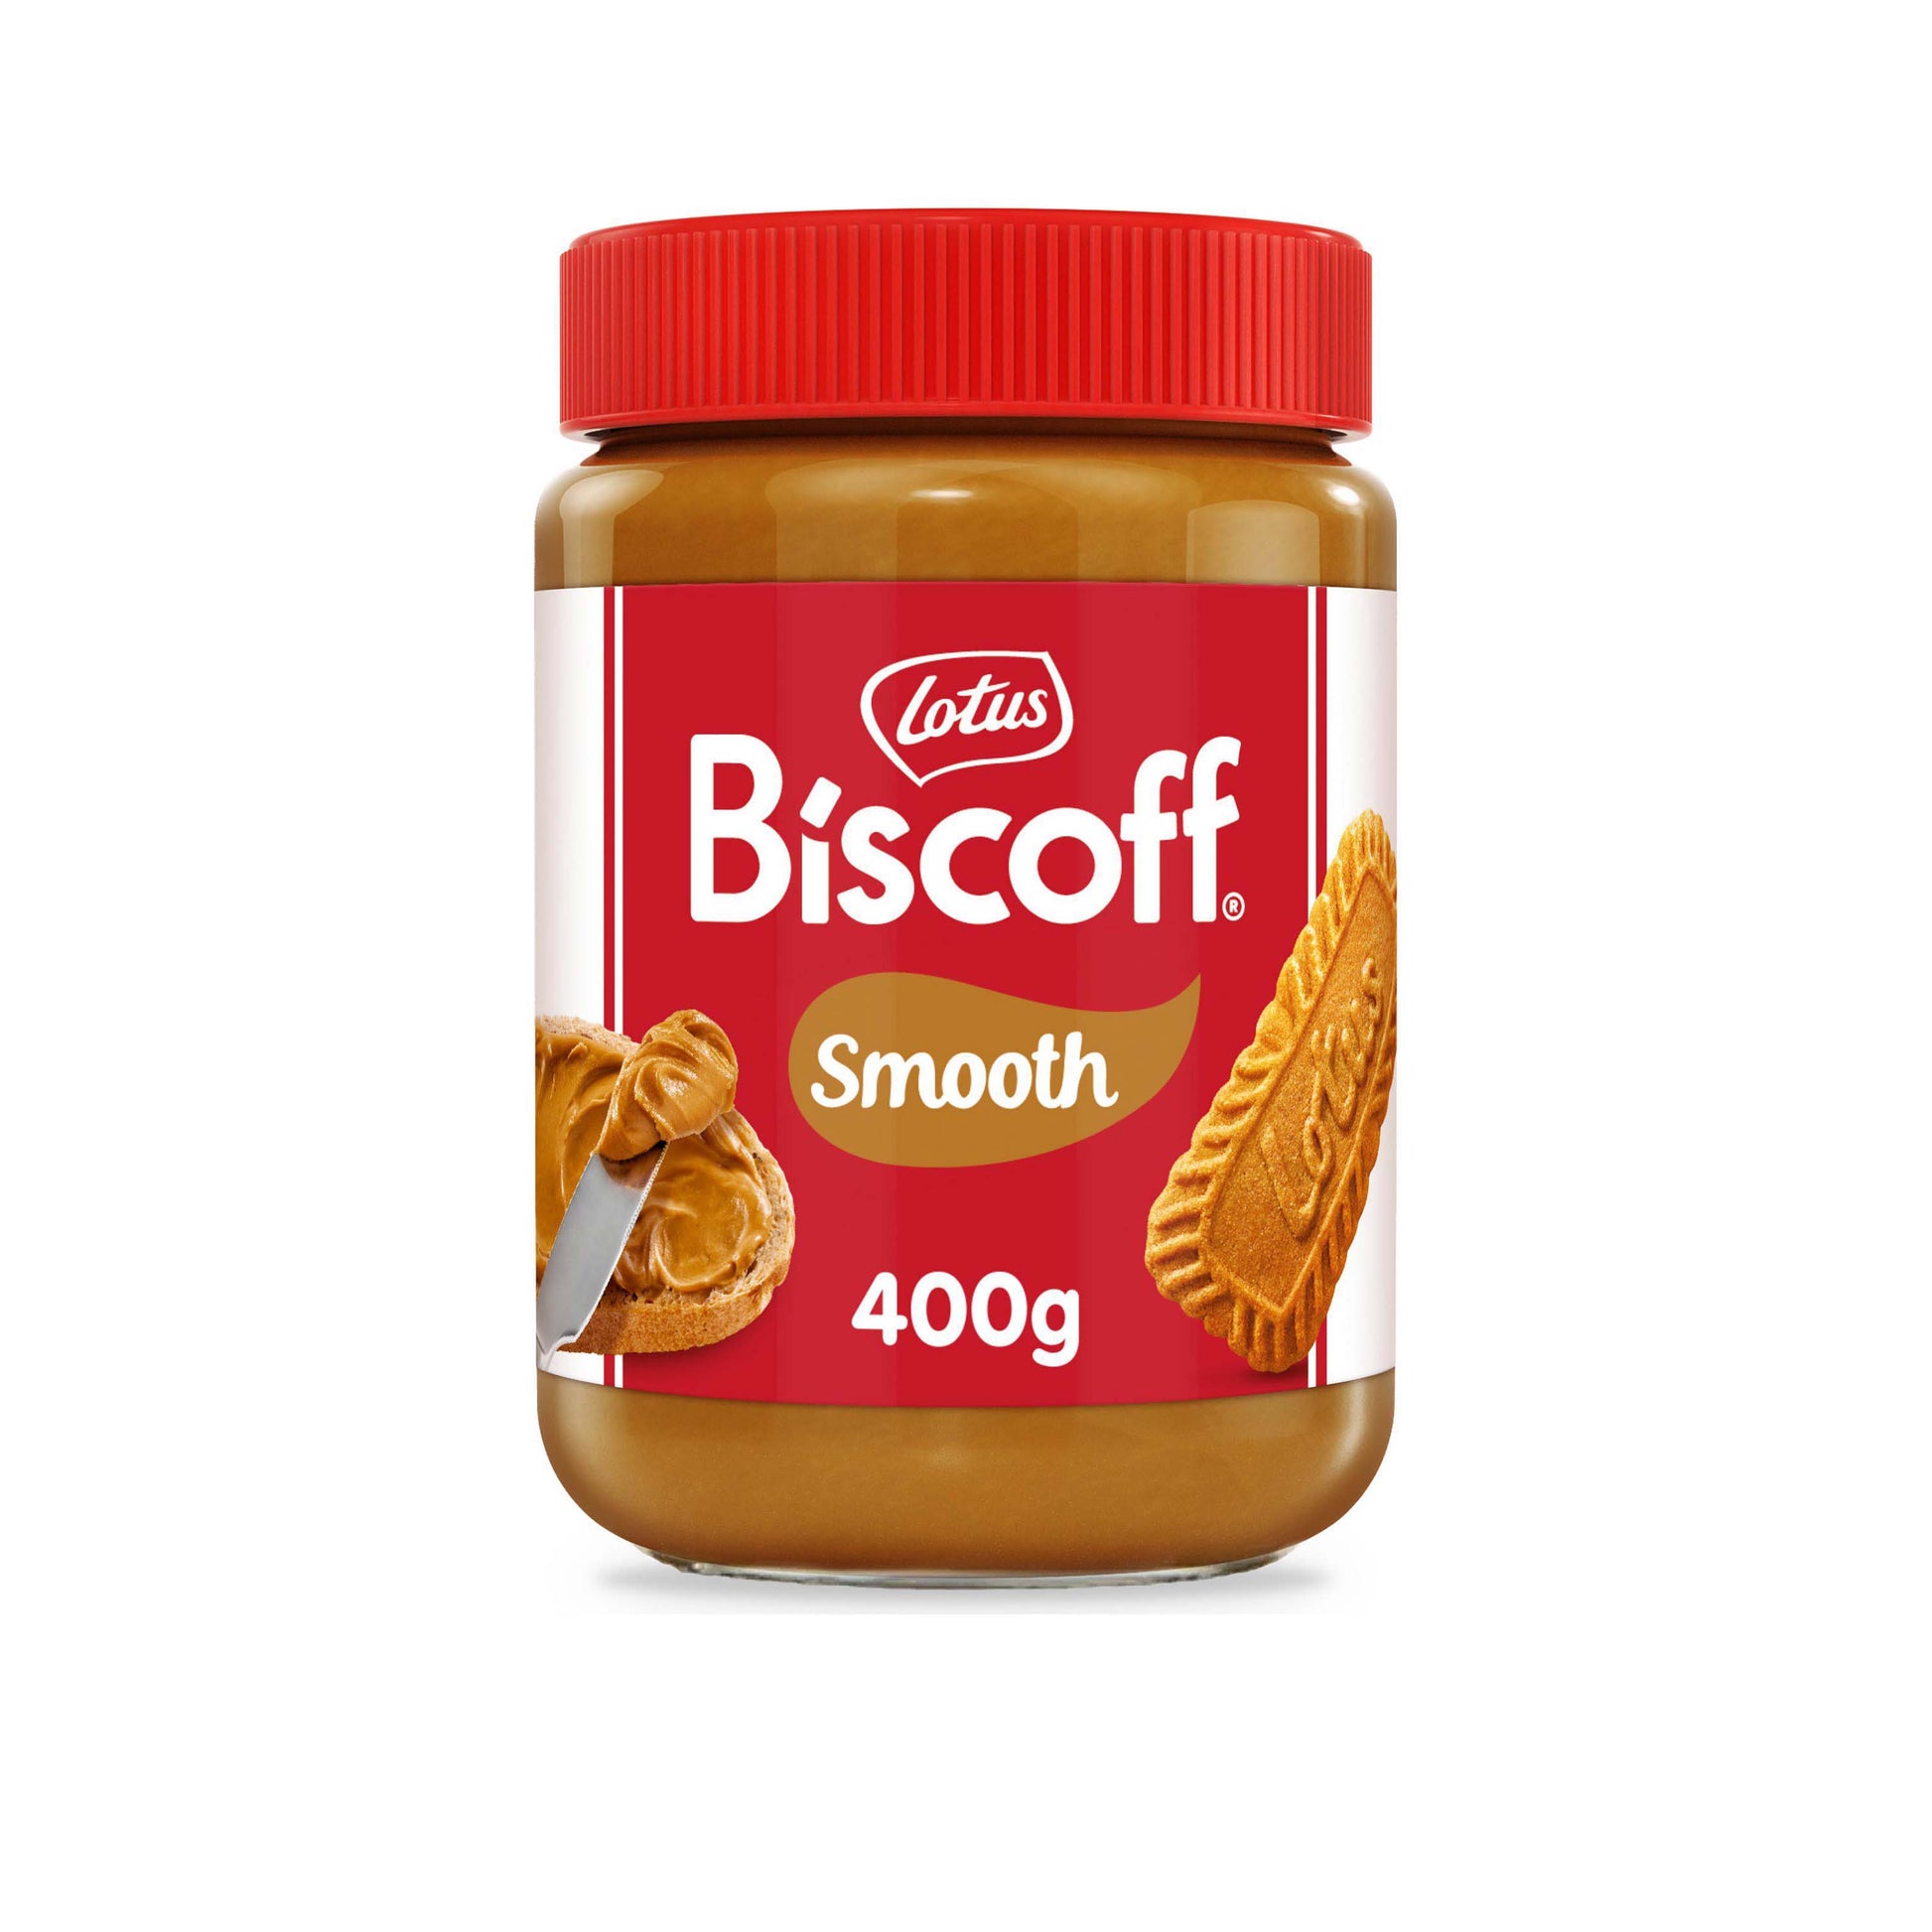 Lotus Biscoff Biscuit Smooth Spread - 400g - BRITISH SNACKS